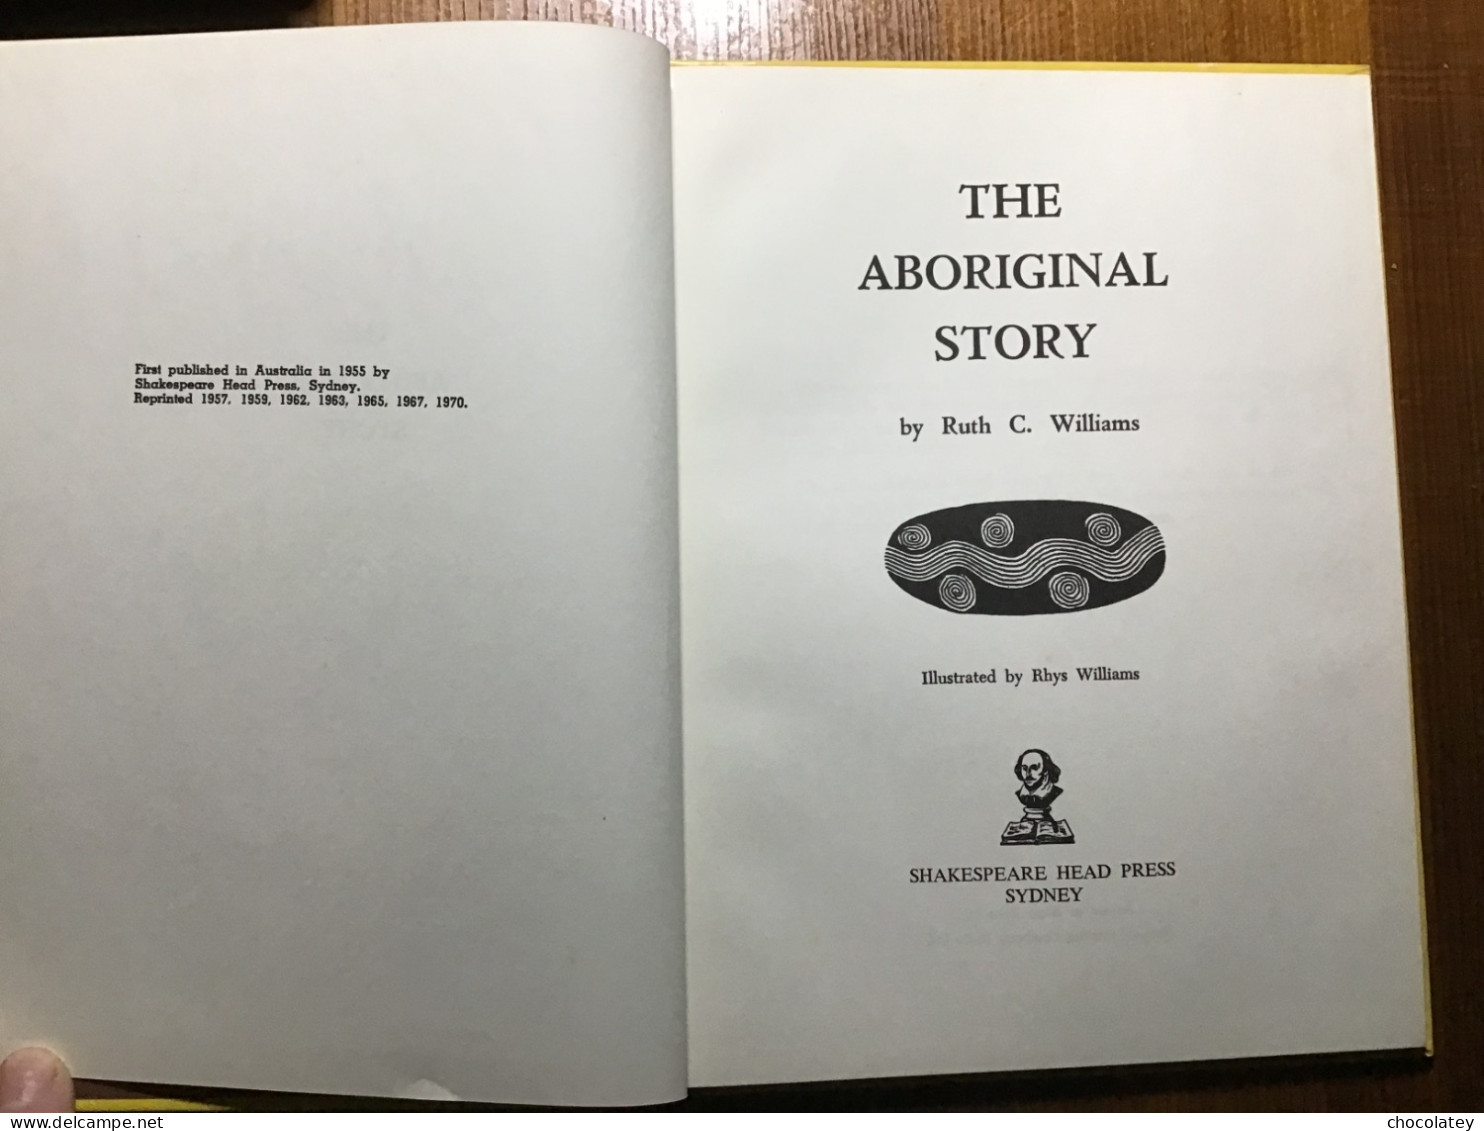 The Aboriginal Story 1970 - Welt